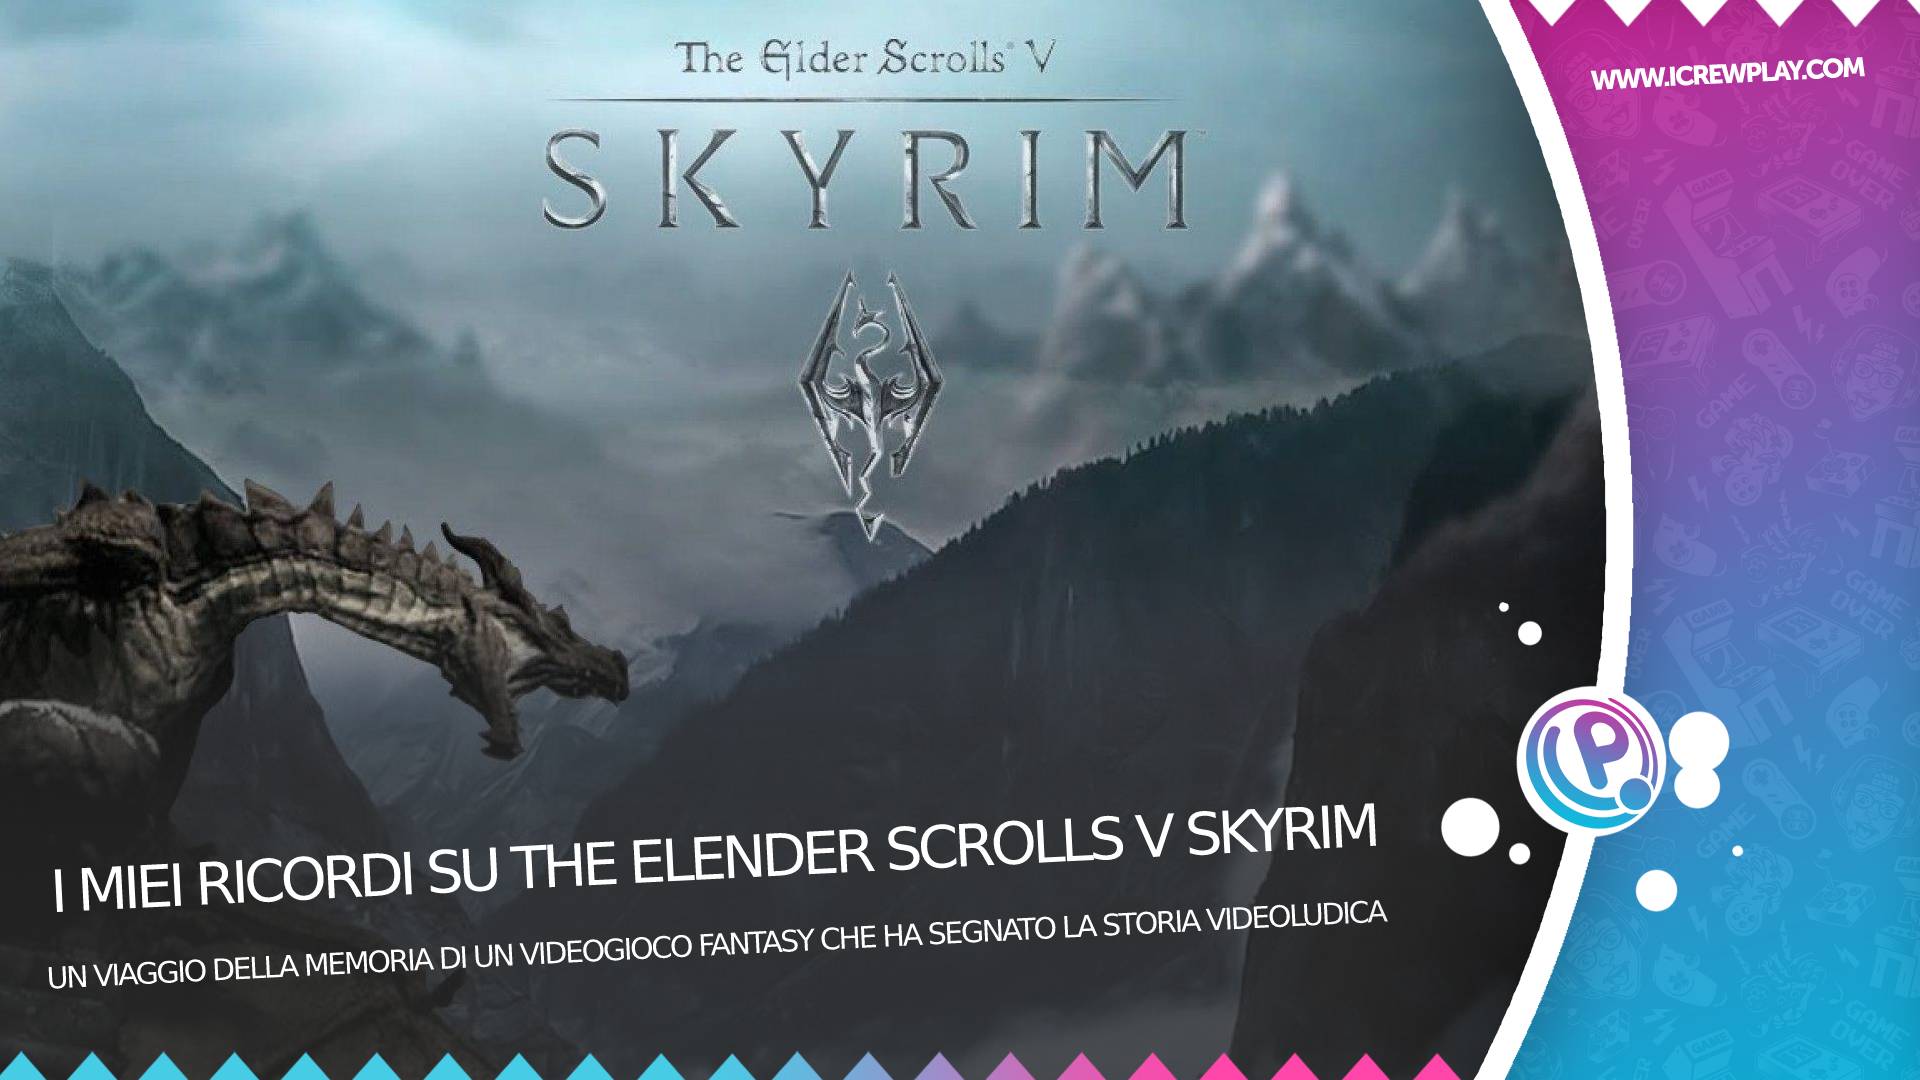 I Miei ricordi su The Elder Scrolls V Skyrim 4